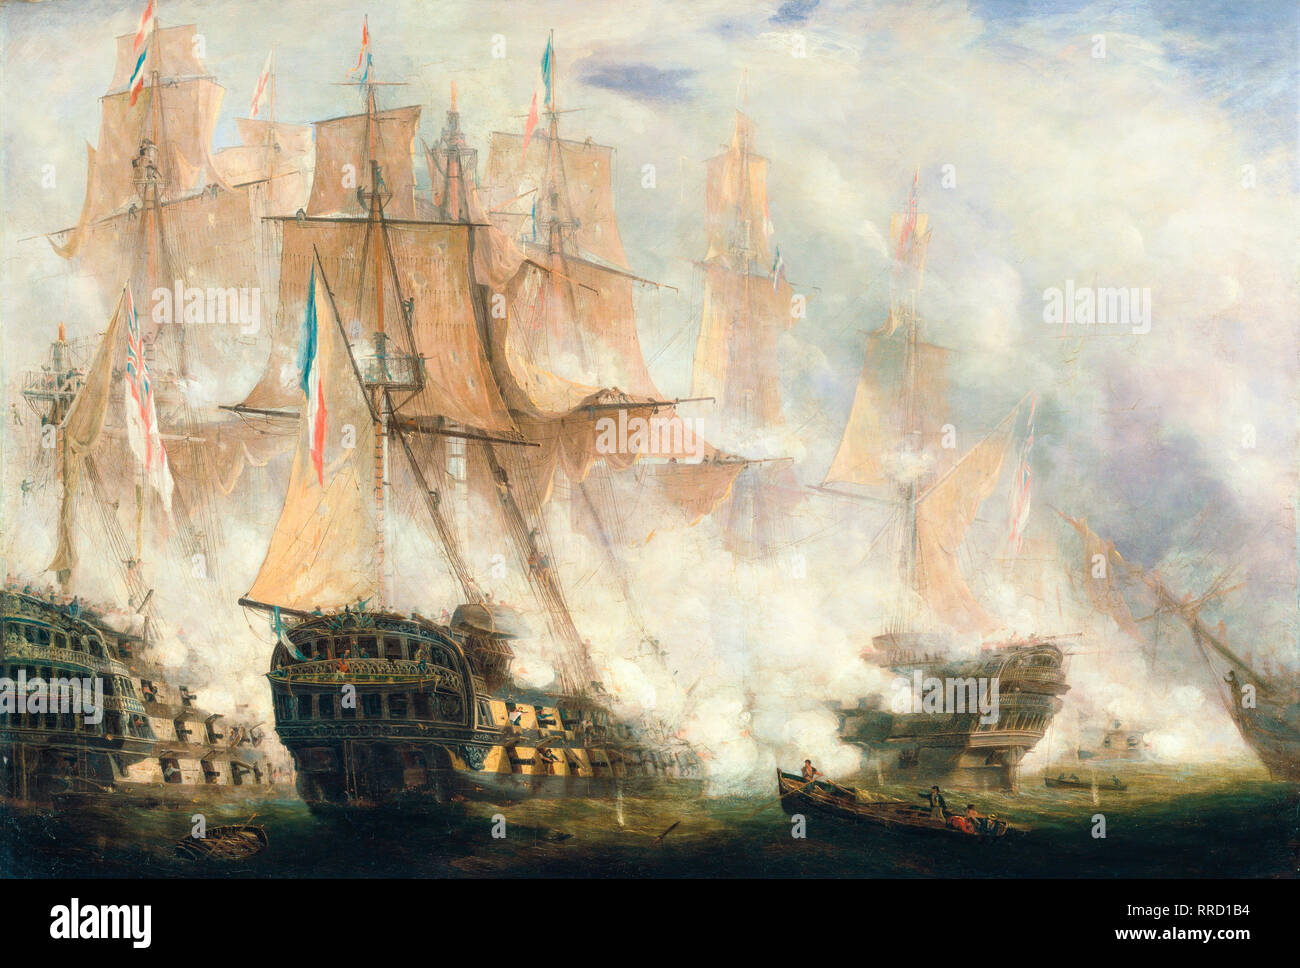 John Christian Schetky, The Battle of Trafalgar, c. 1841 painting Stock Photo